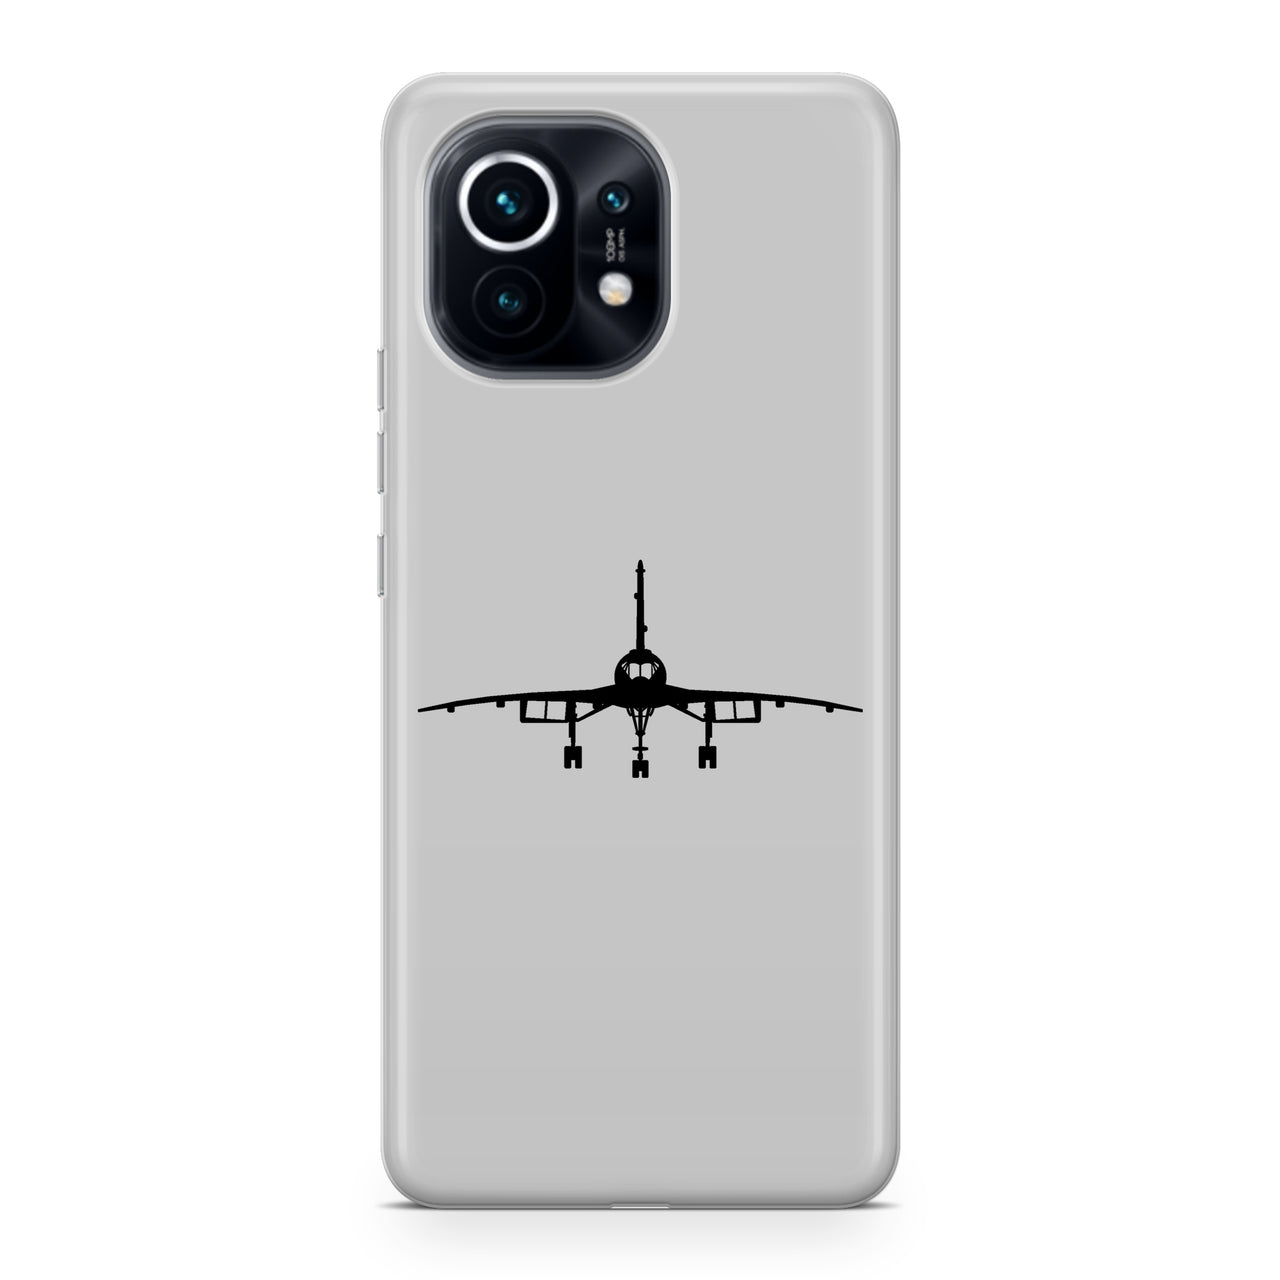 Concorde Silhouette Designed Xiaomi Cases